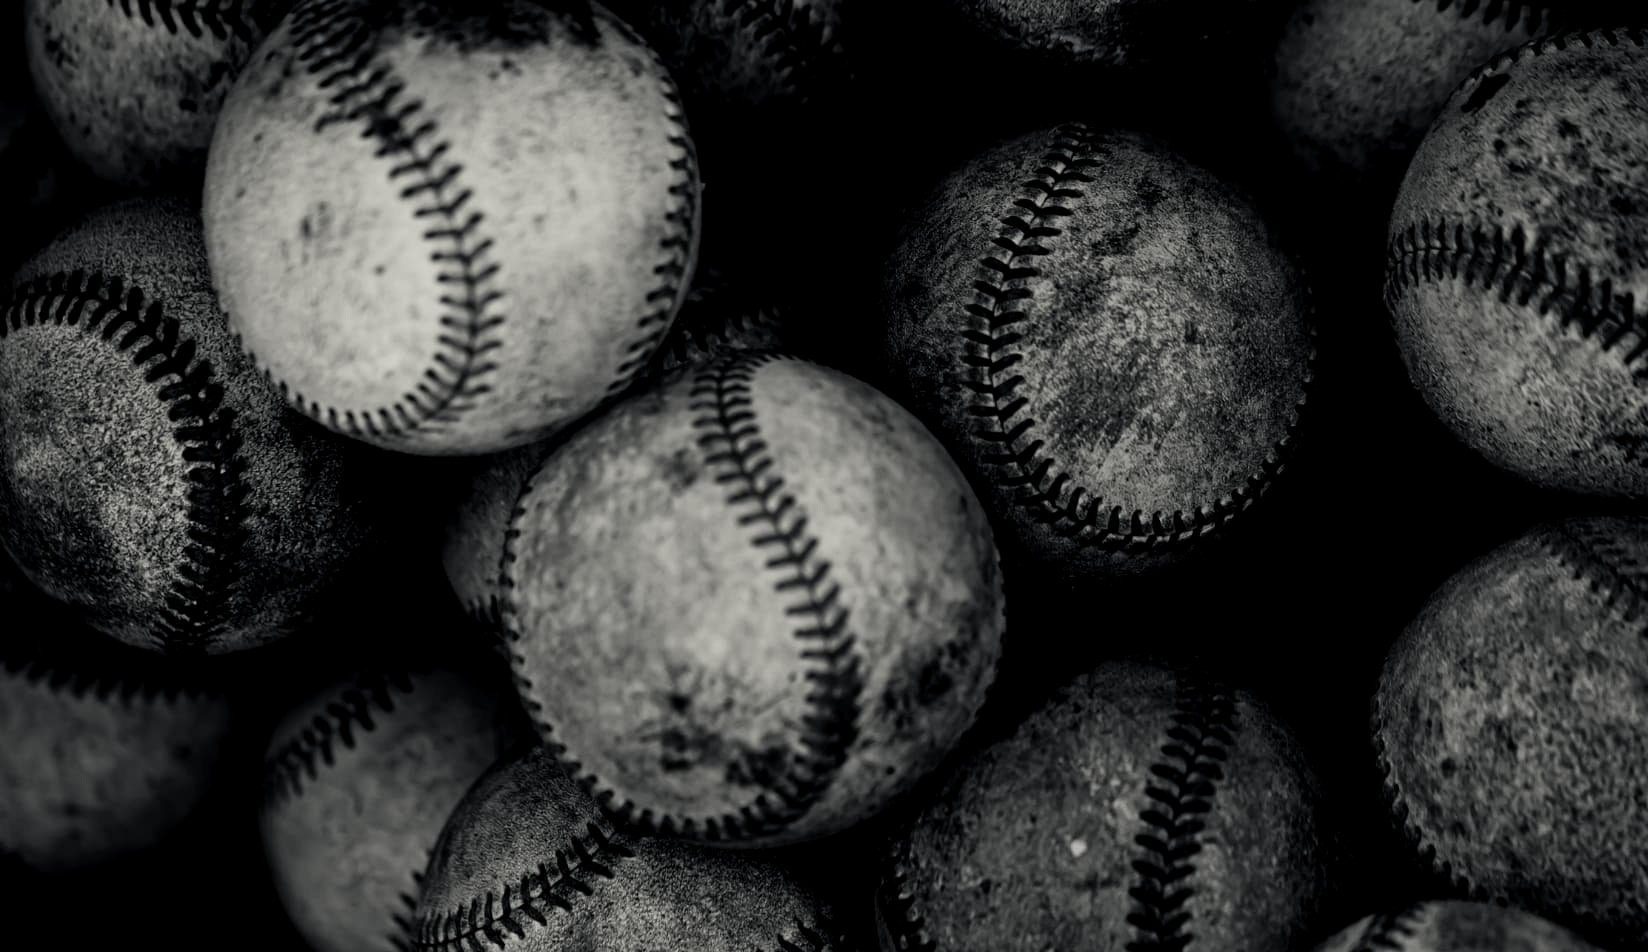 The Expos – Expos Baseball Club